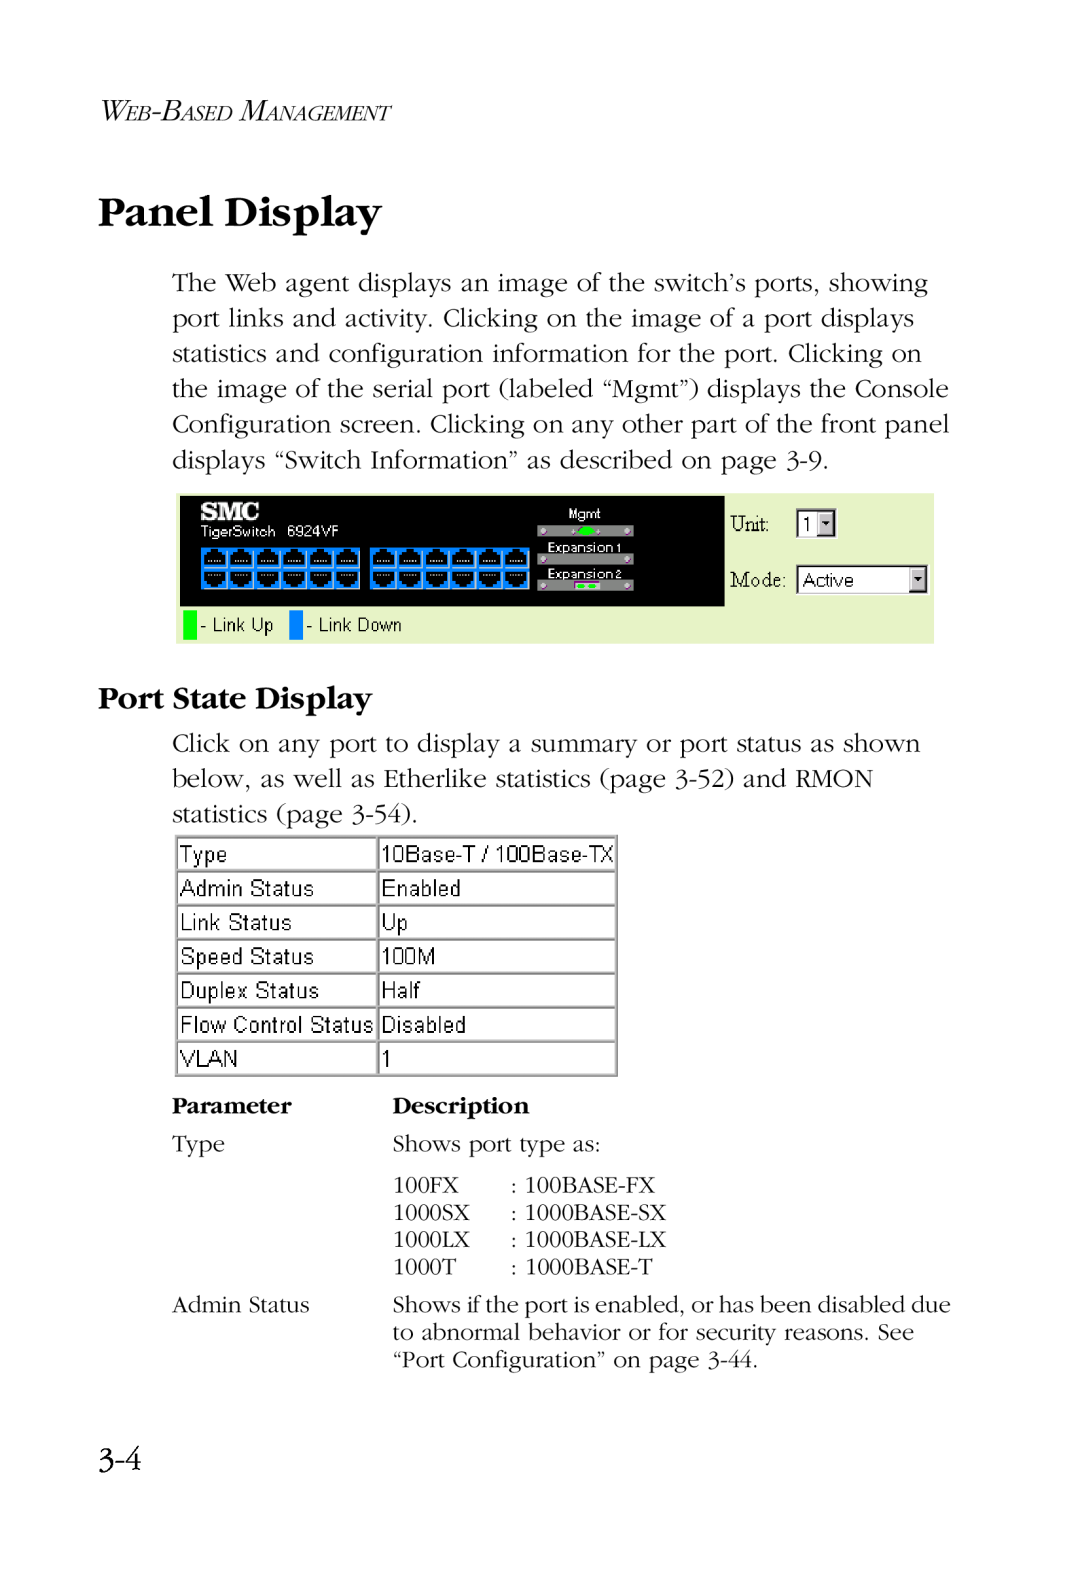 SMC Networks SMC6924VF manual Panel Display, Port State Display 